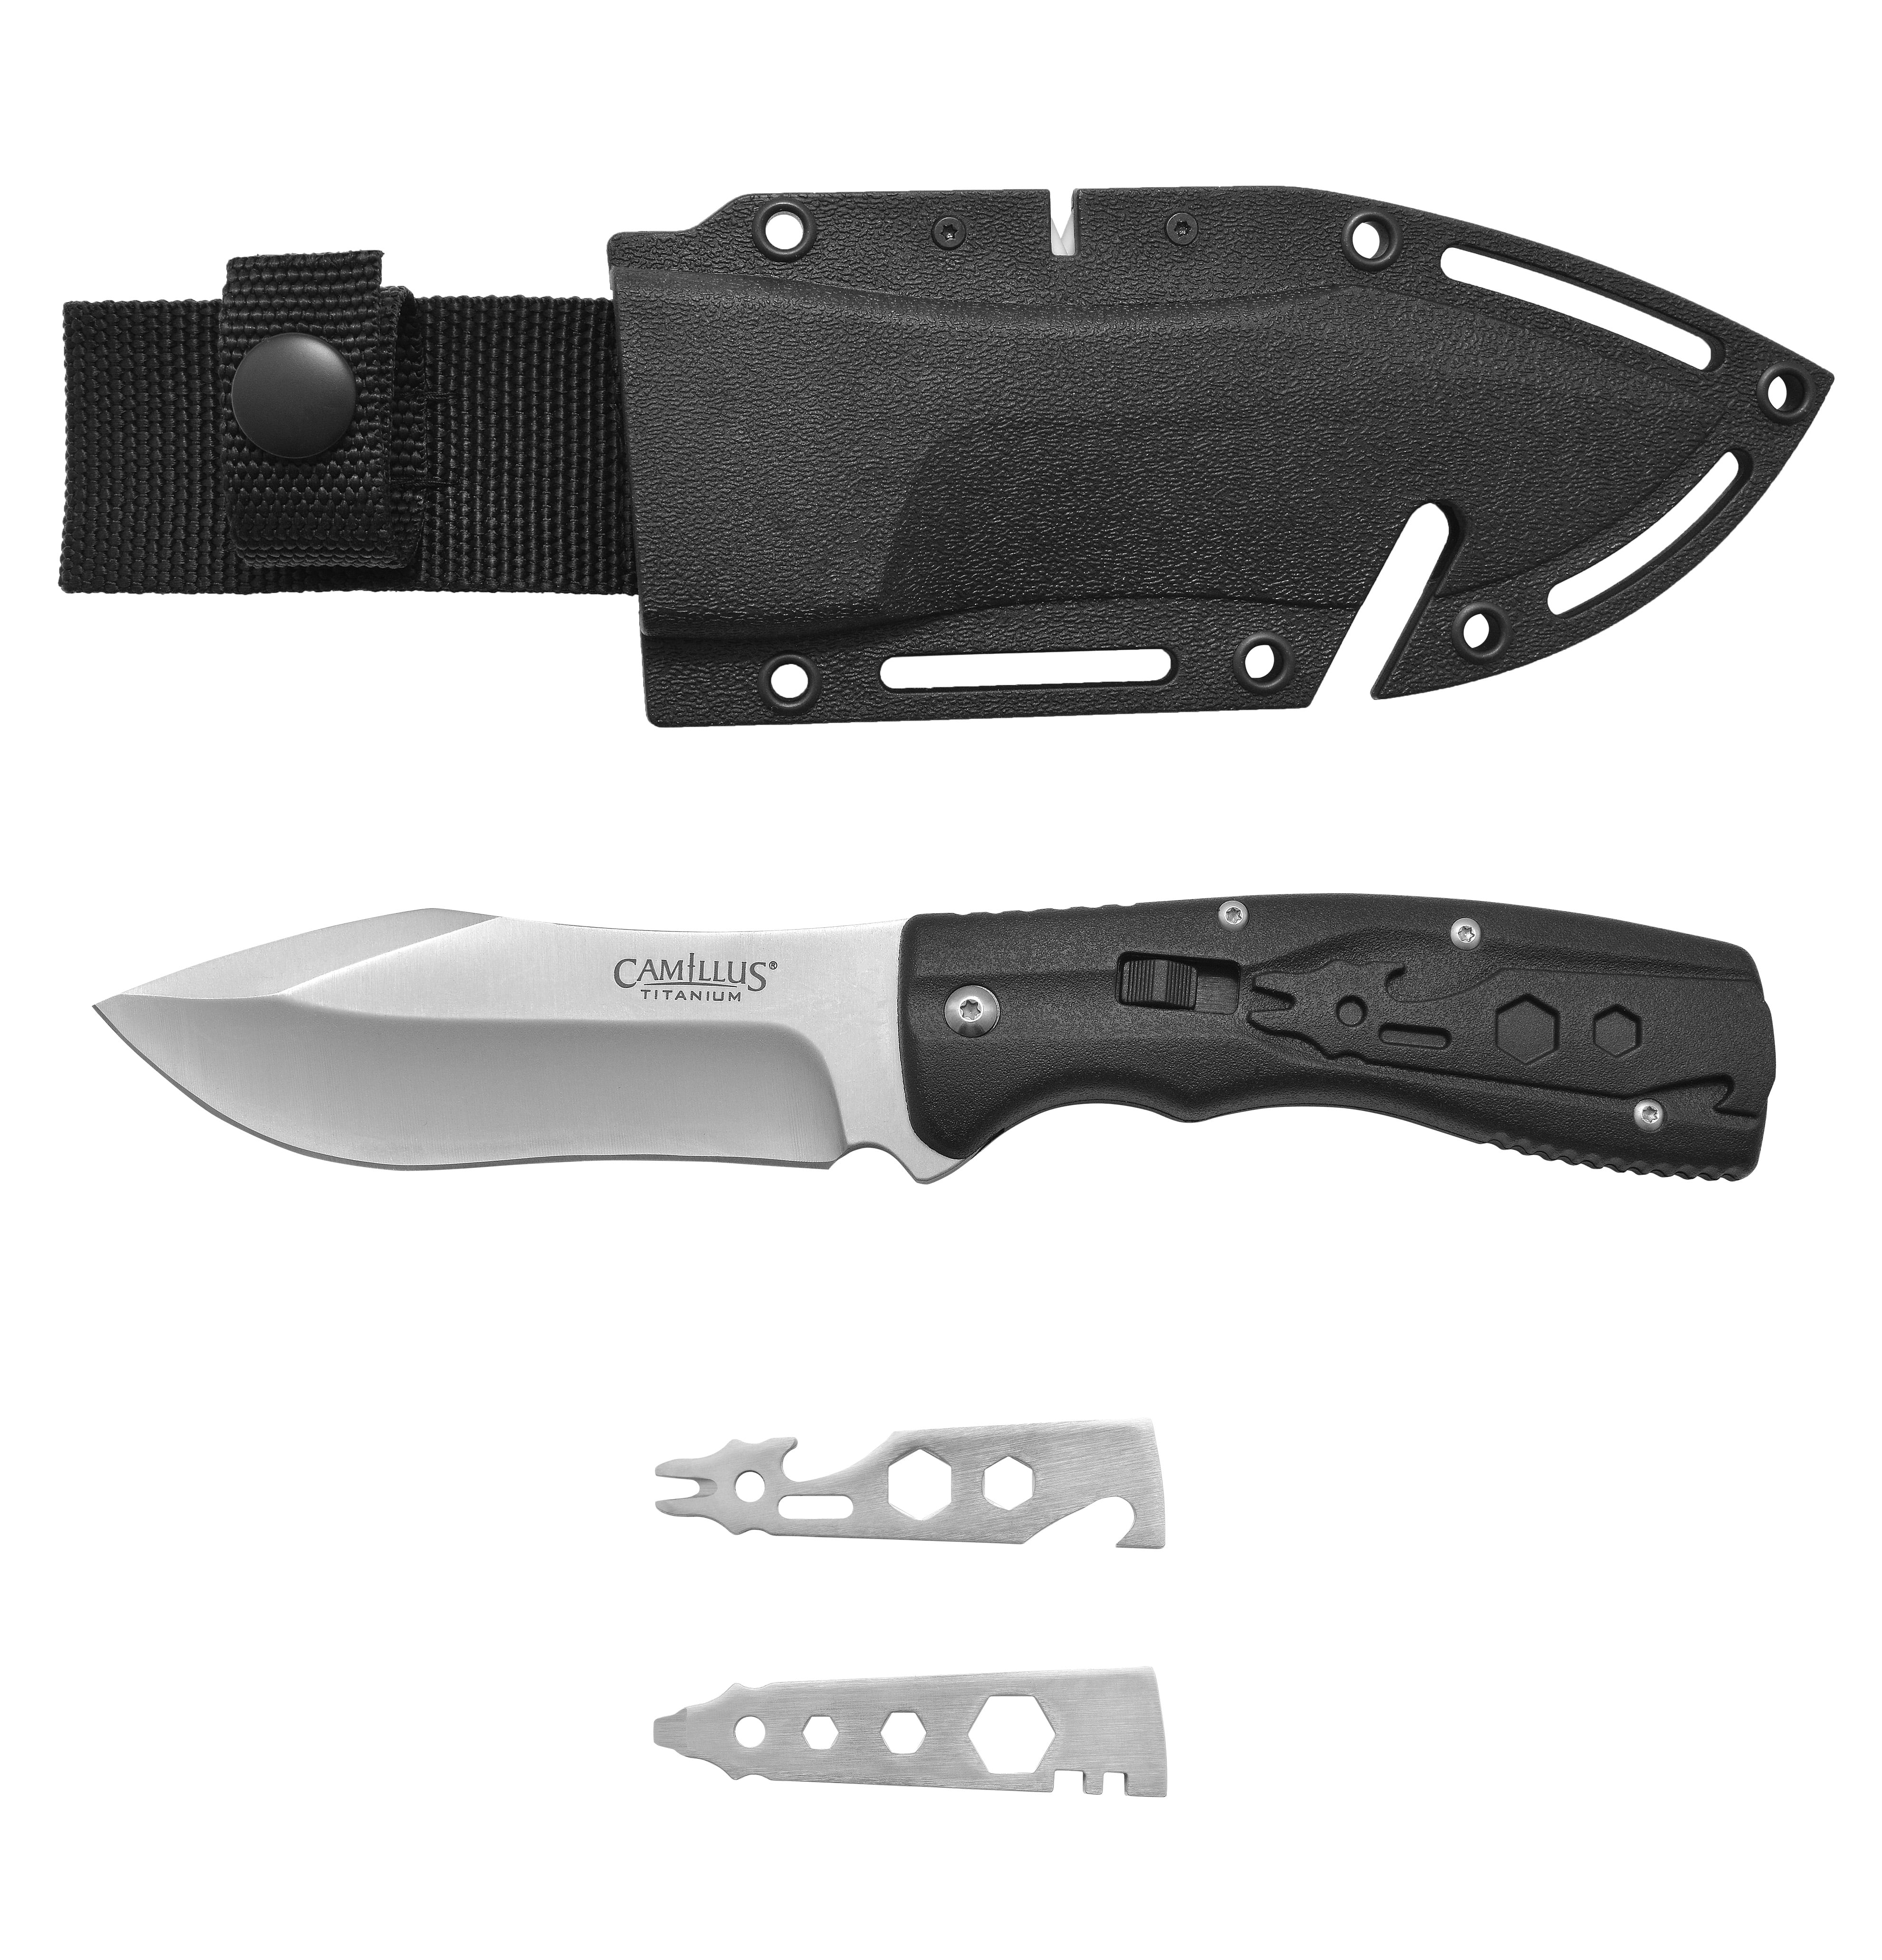 Camillus Injekt 9" Multi-Tool Survival Knife, Fixed 4.25" Blade with Sharpener and Sheath, Black Walmart.com